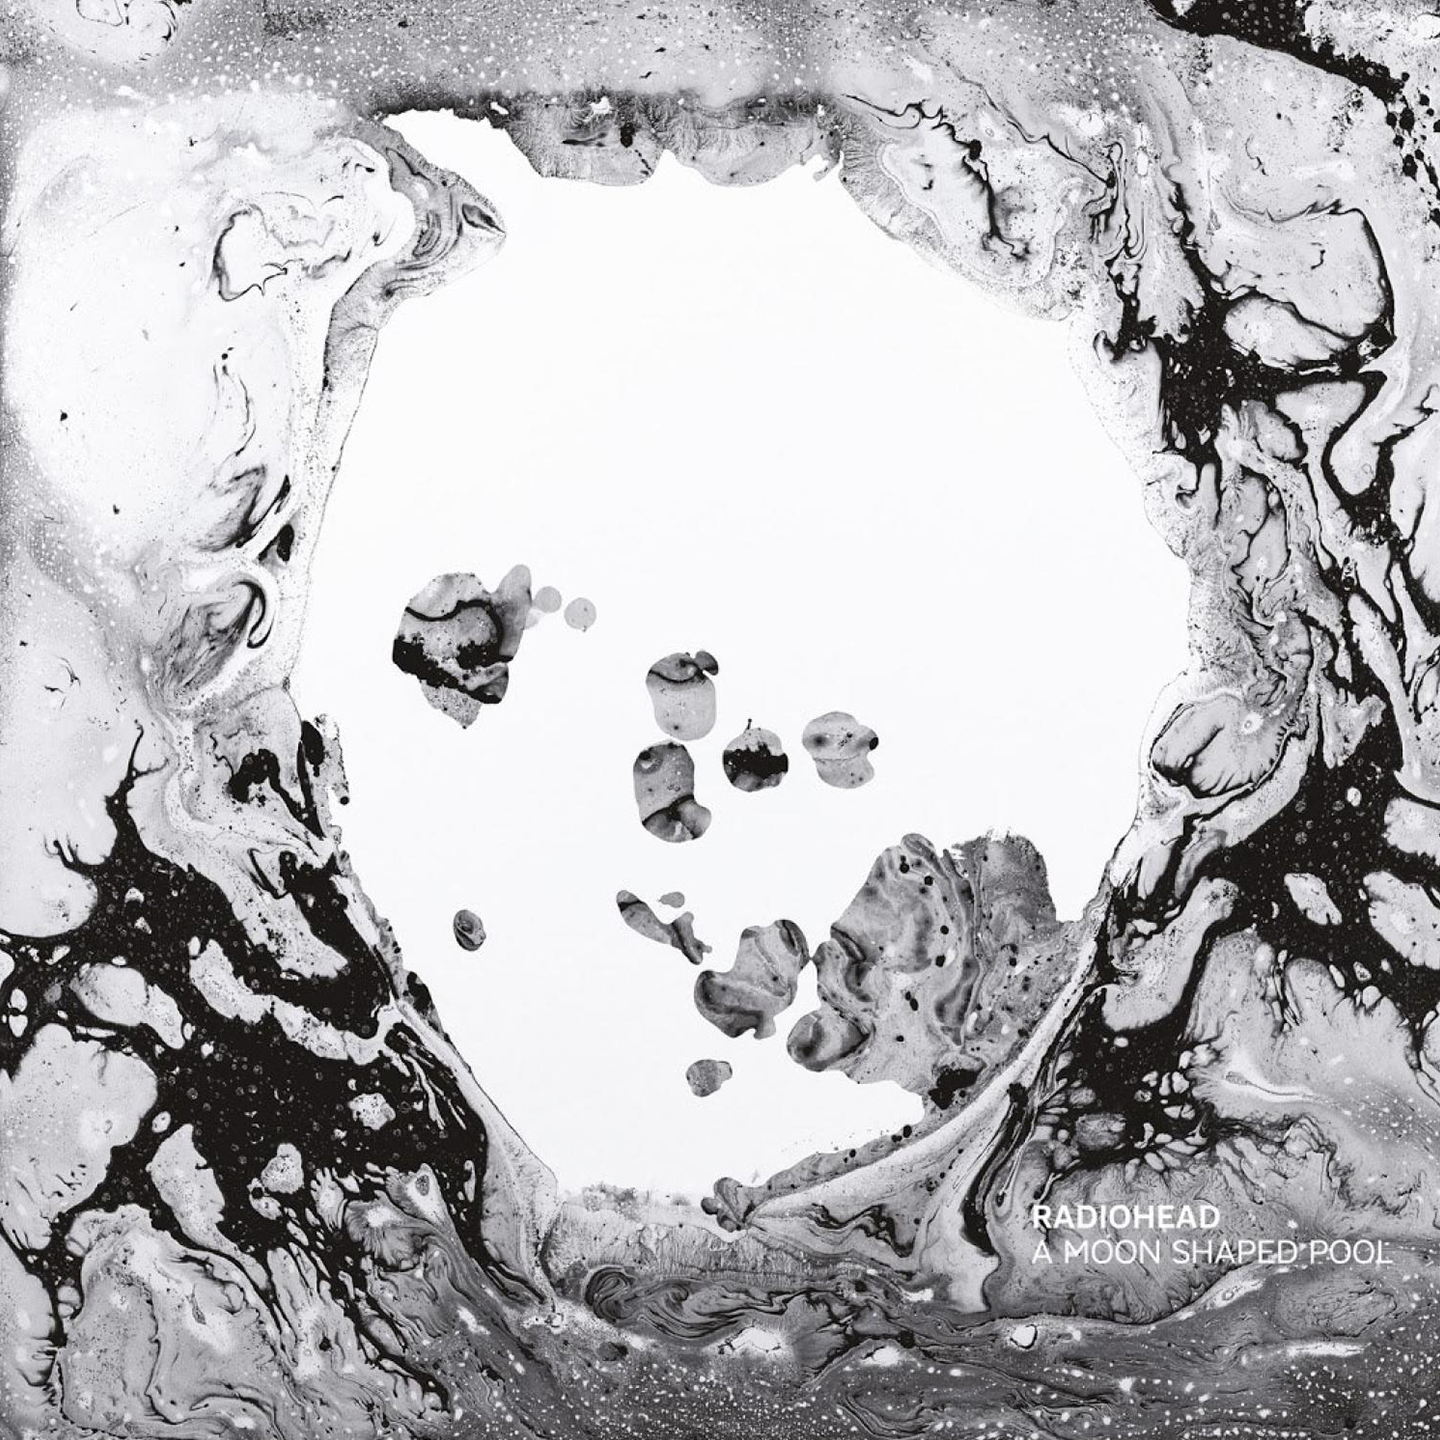 radiohead-a moon shaped pool